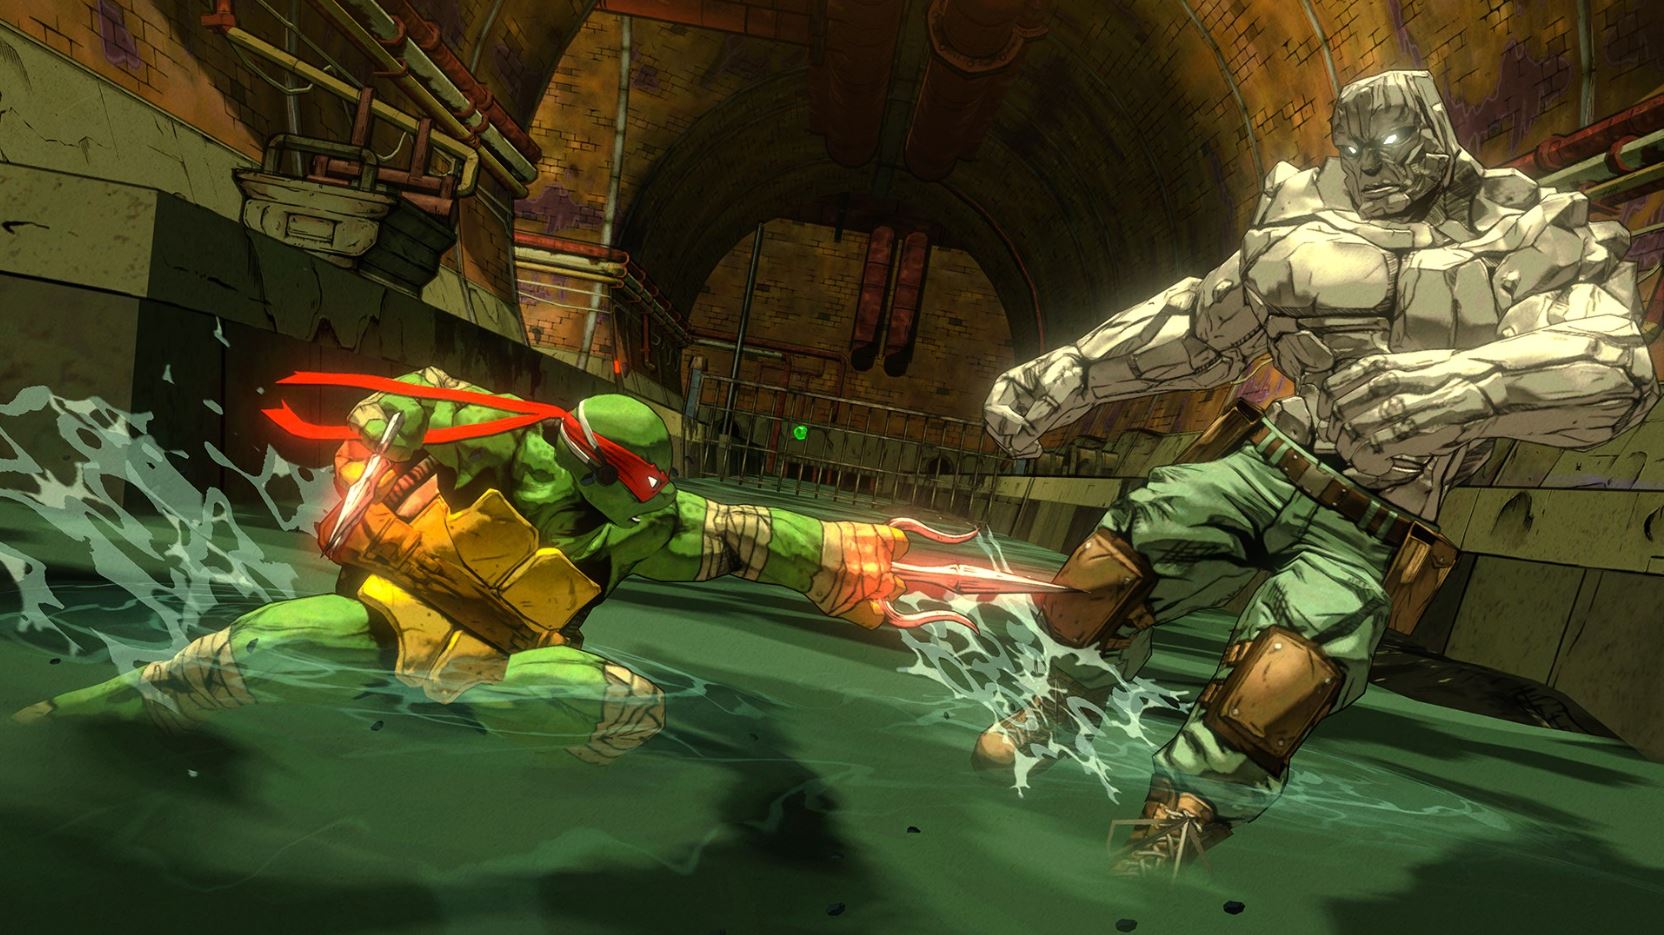 Raphael esfaqueia um inimigo em Teenage Mutant Ninja Turtles: Mutants in Manhattan.